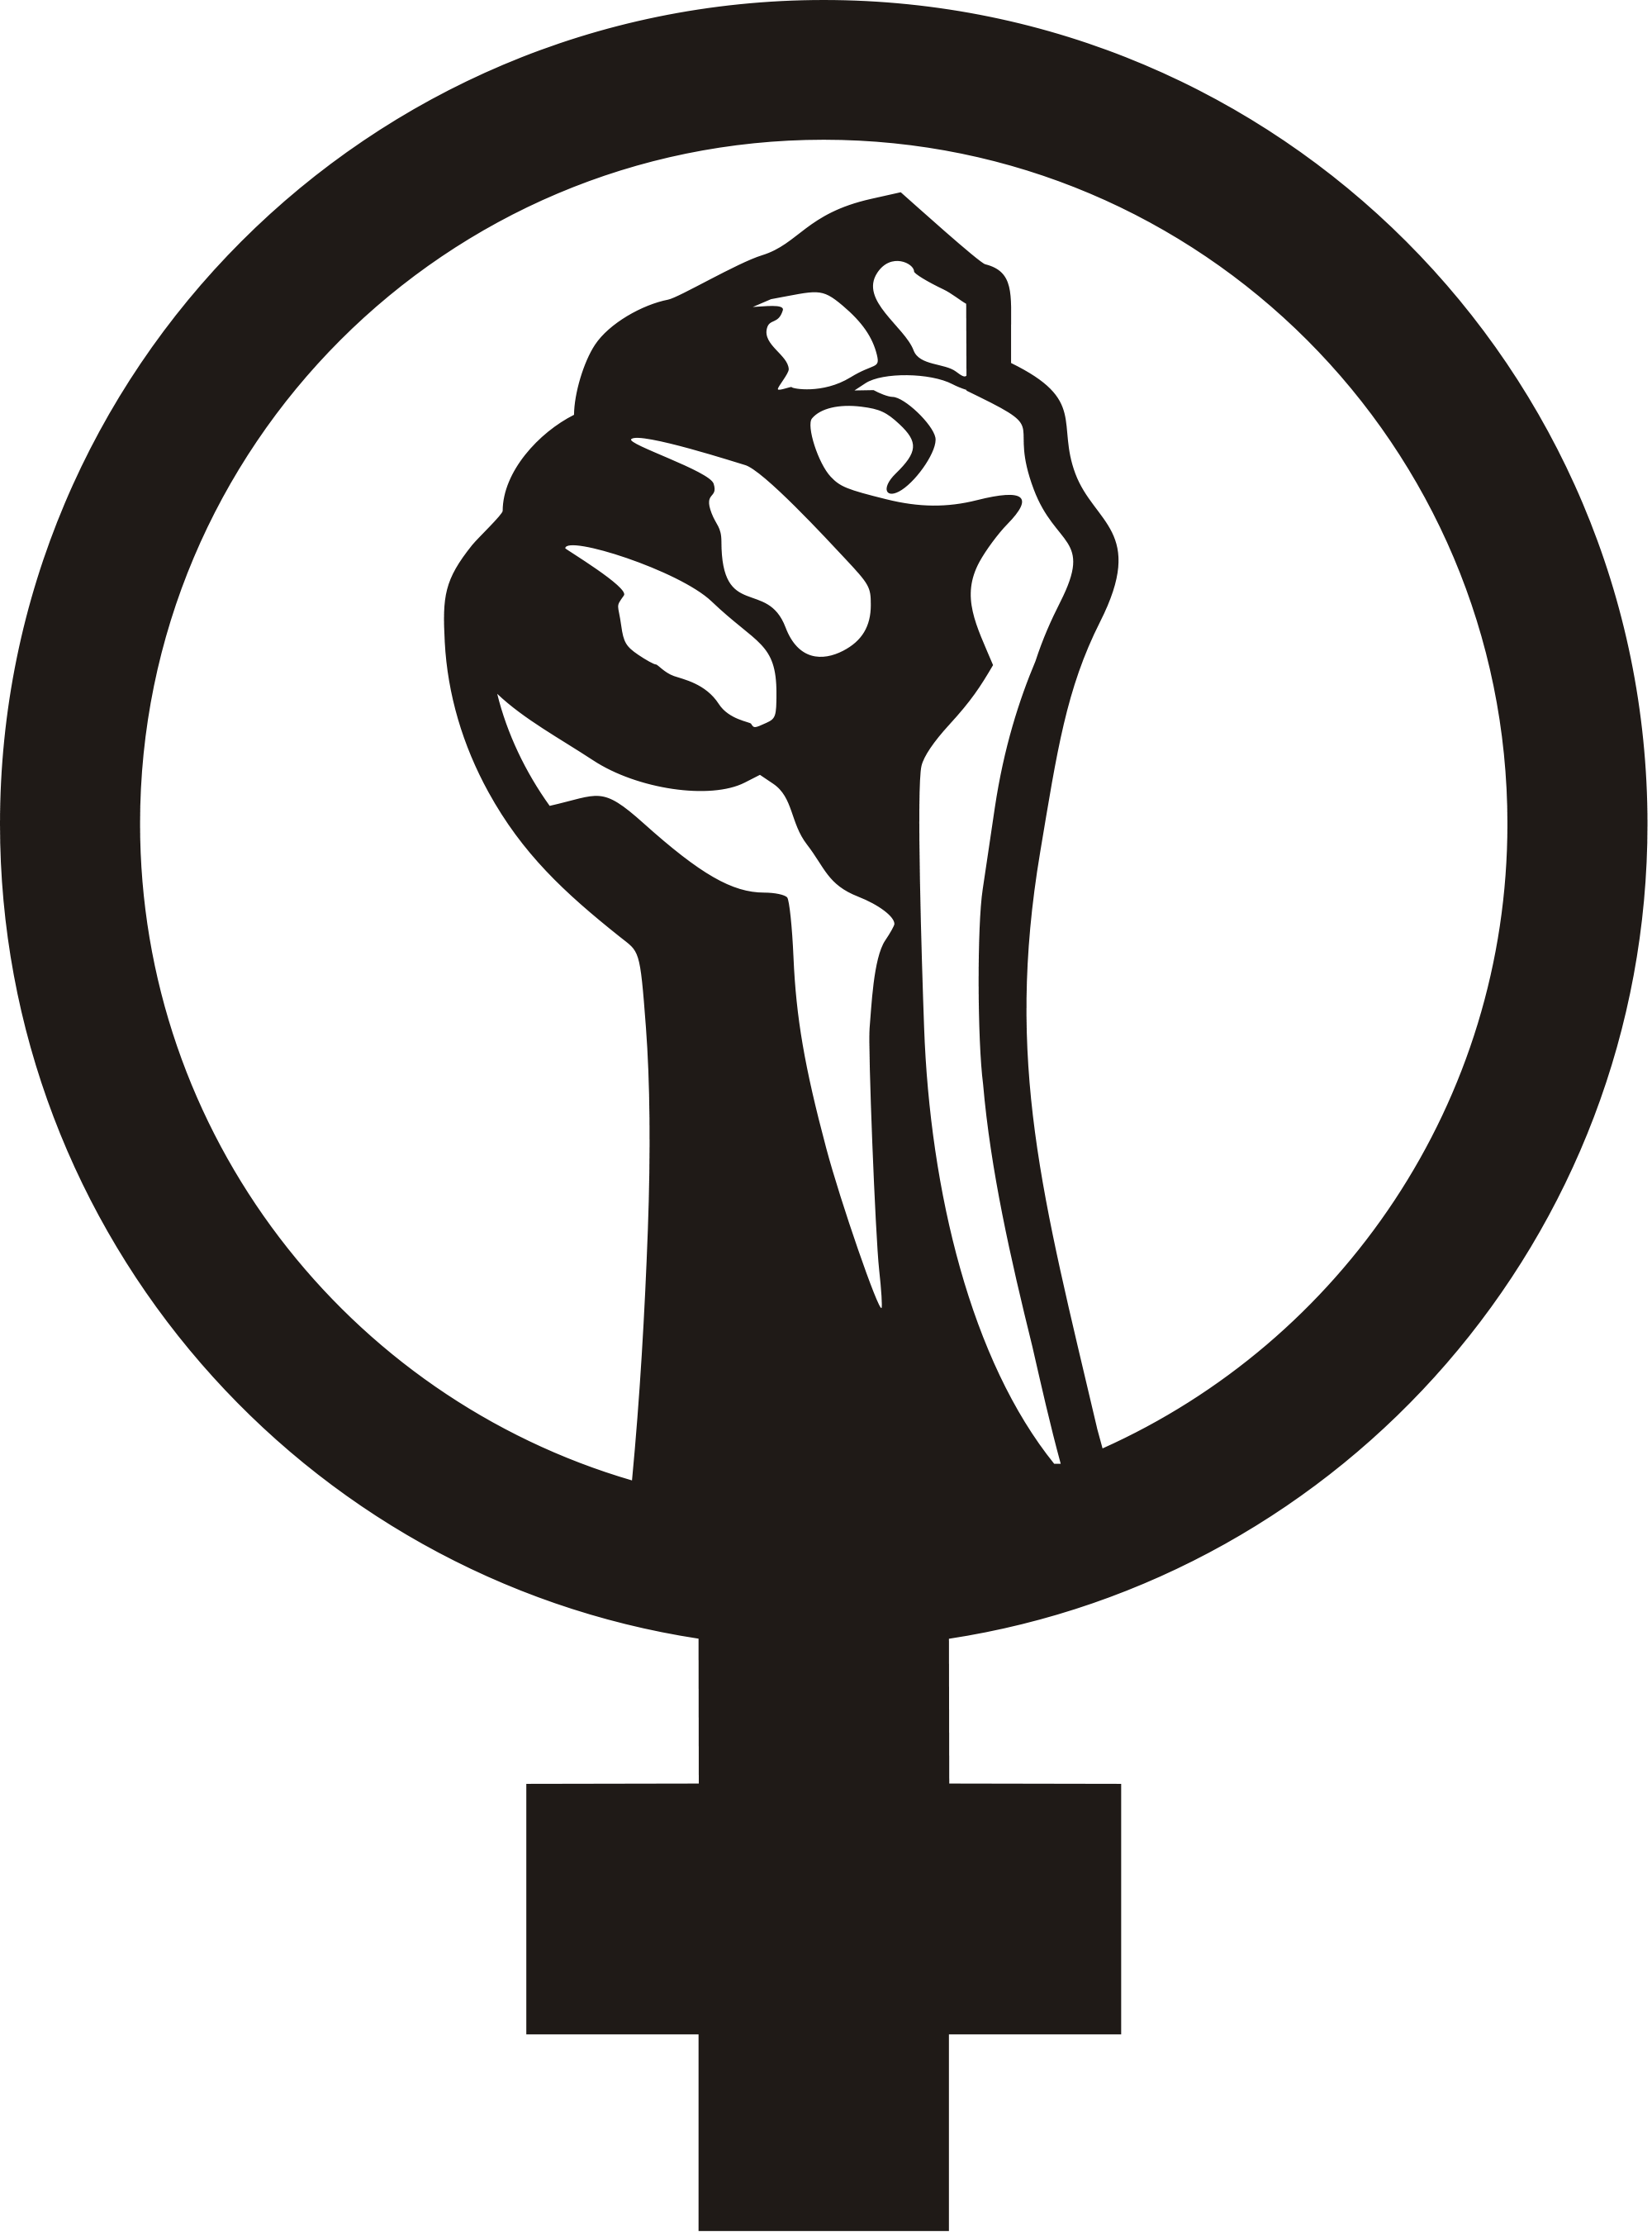 Anarcha-feminism - Wikipedia, the free encyclopedia